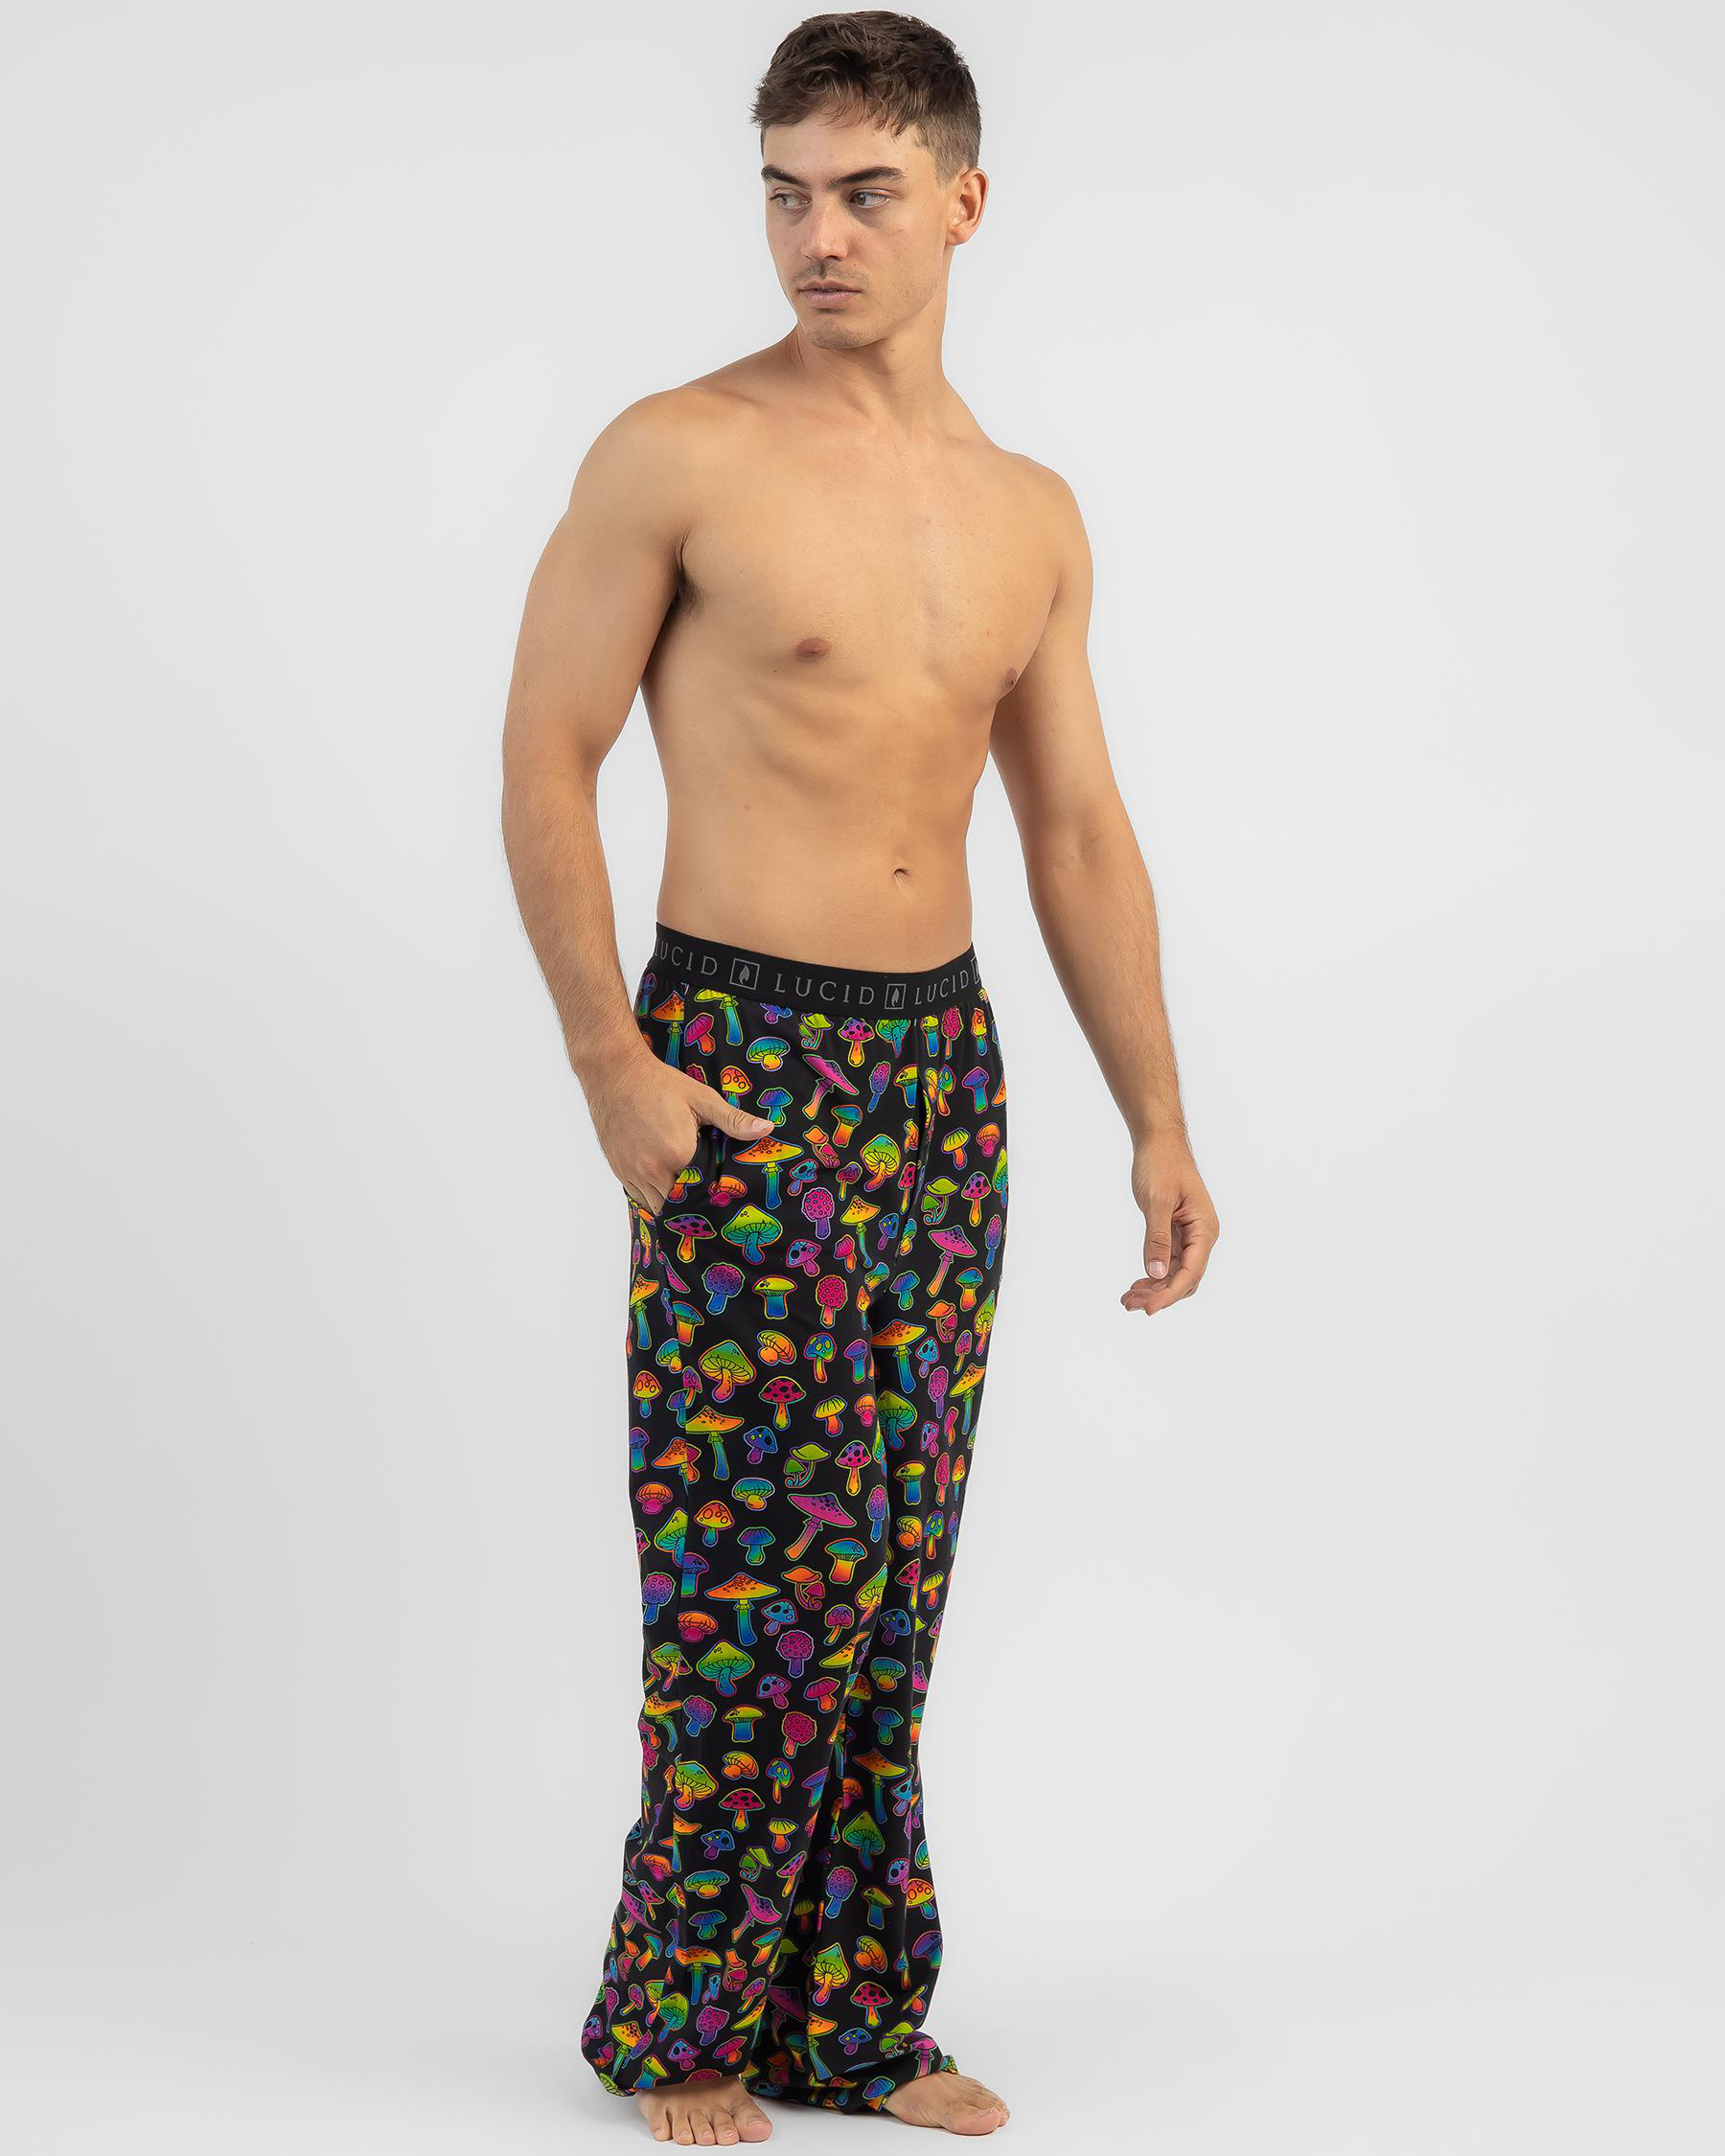 Shop Lucid Magic Mushrooms Pyjama Pants In Black - Fast Shipping & Easy ...